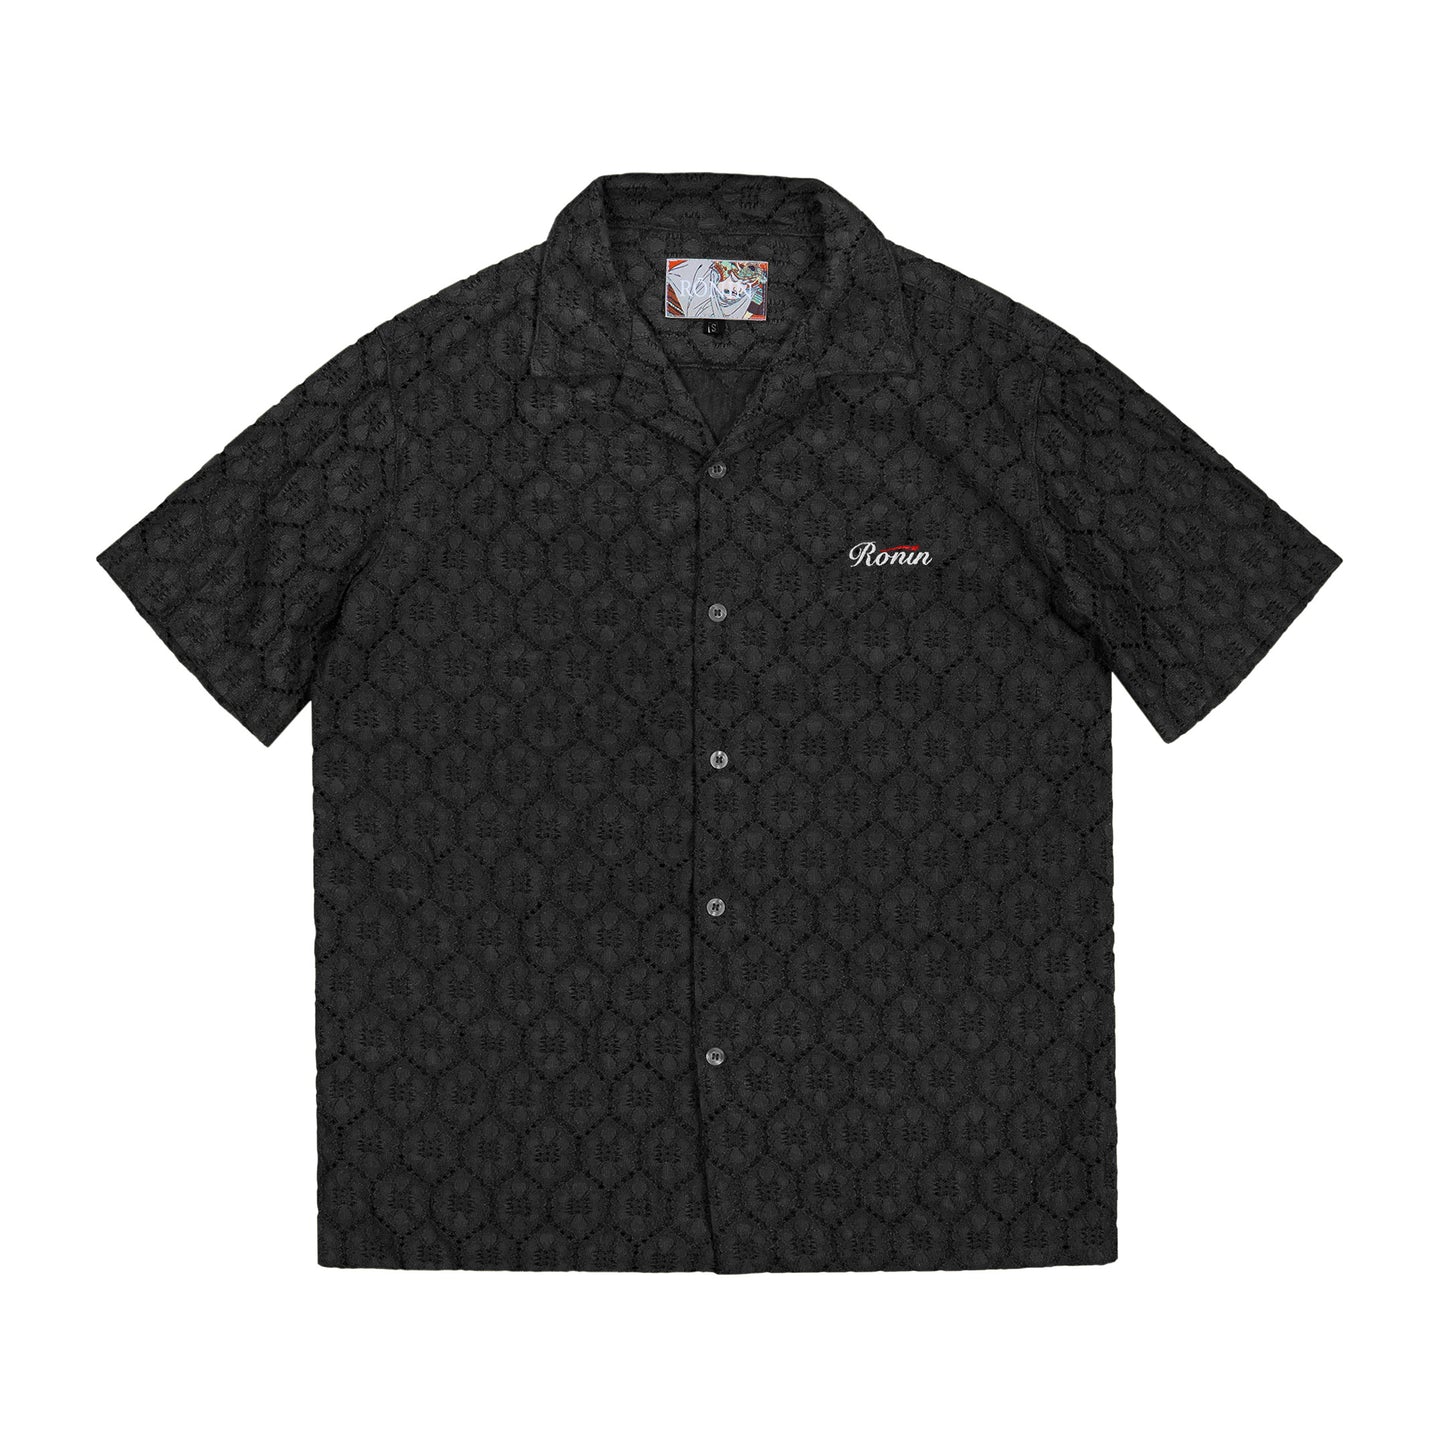 Honeycomb Lace Shirt - Black